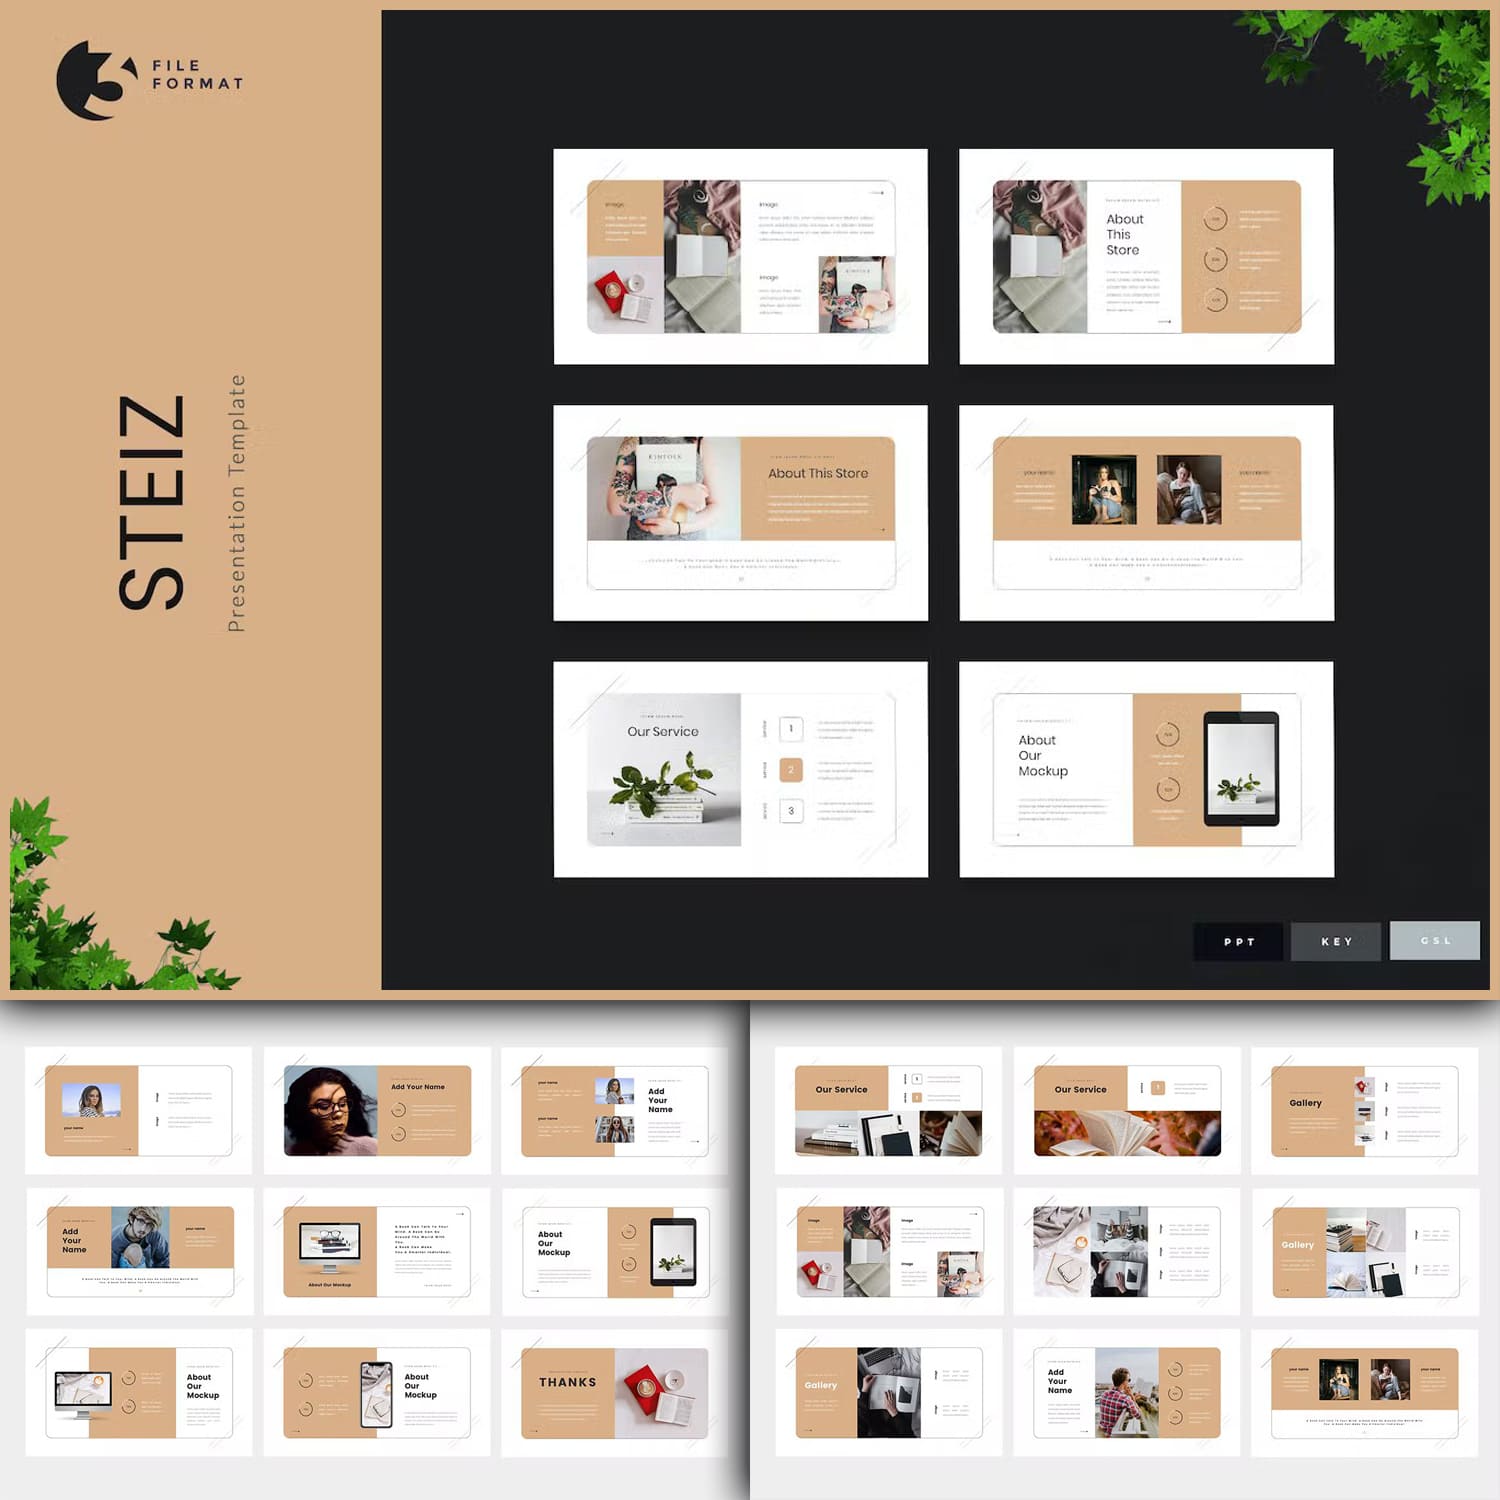 3 file format of Steiz presentation template.